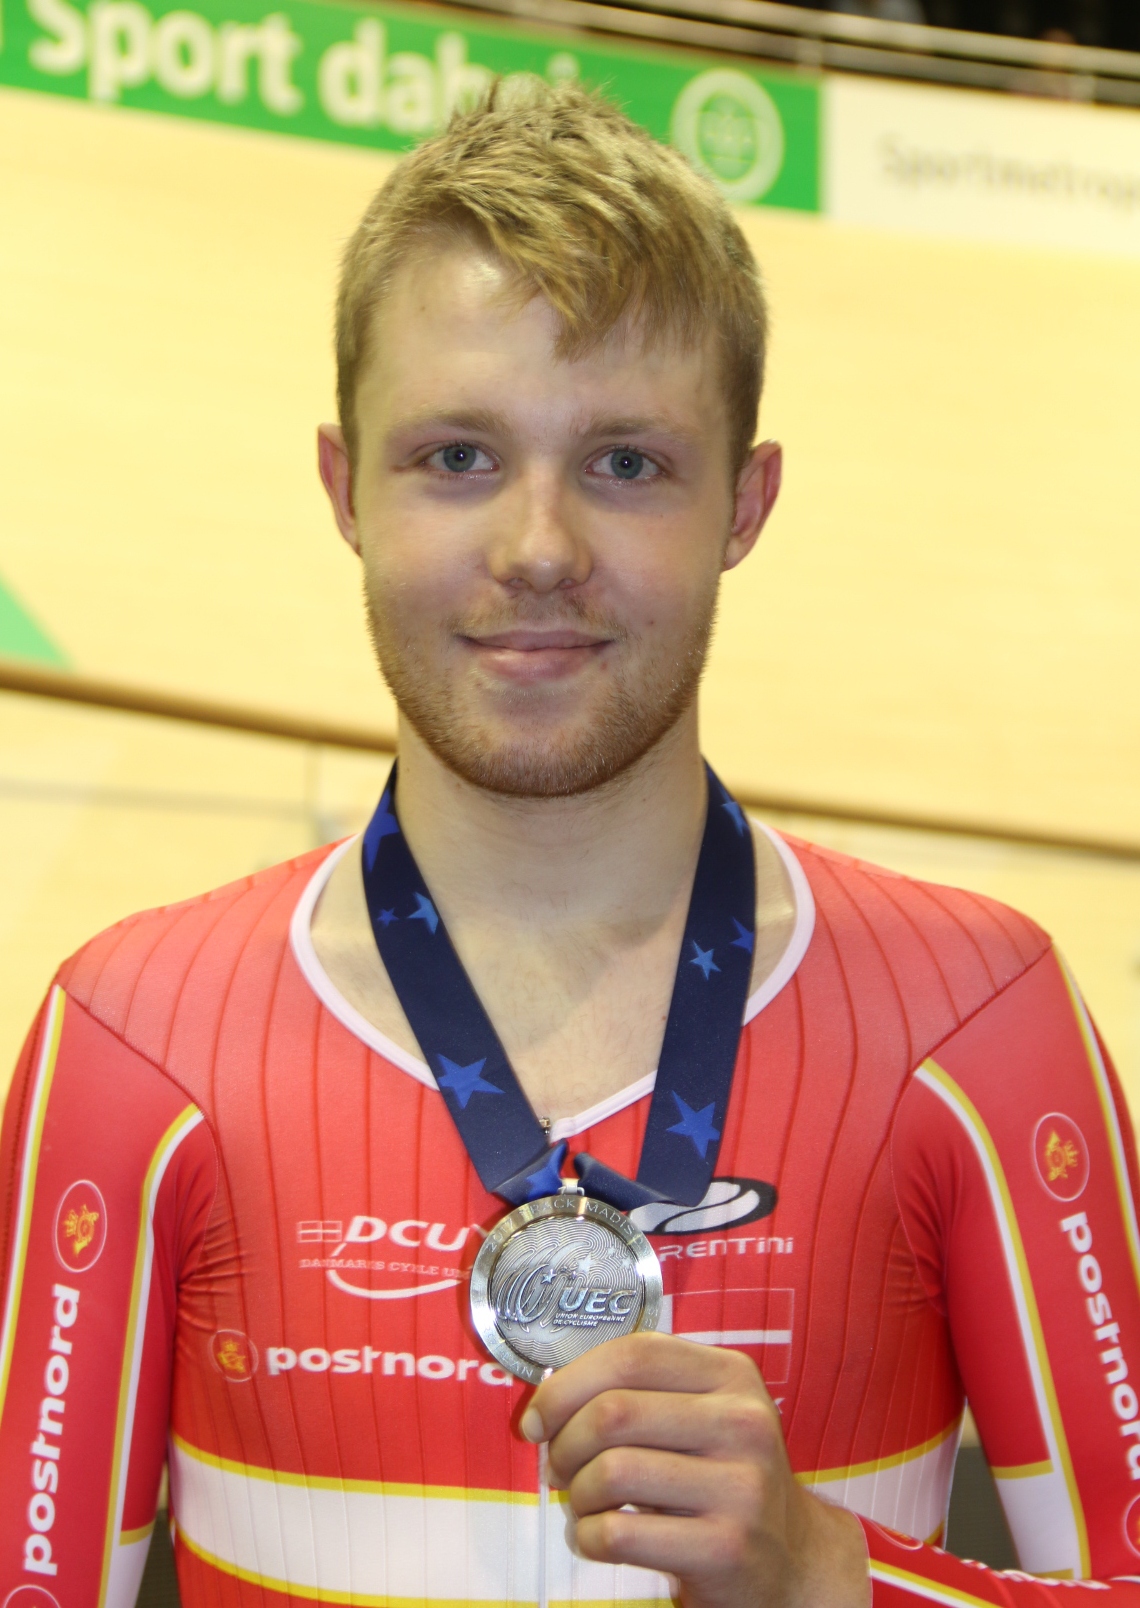 UEC European Champion jersey - Wikipedia